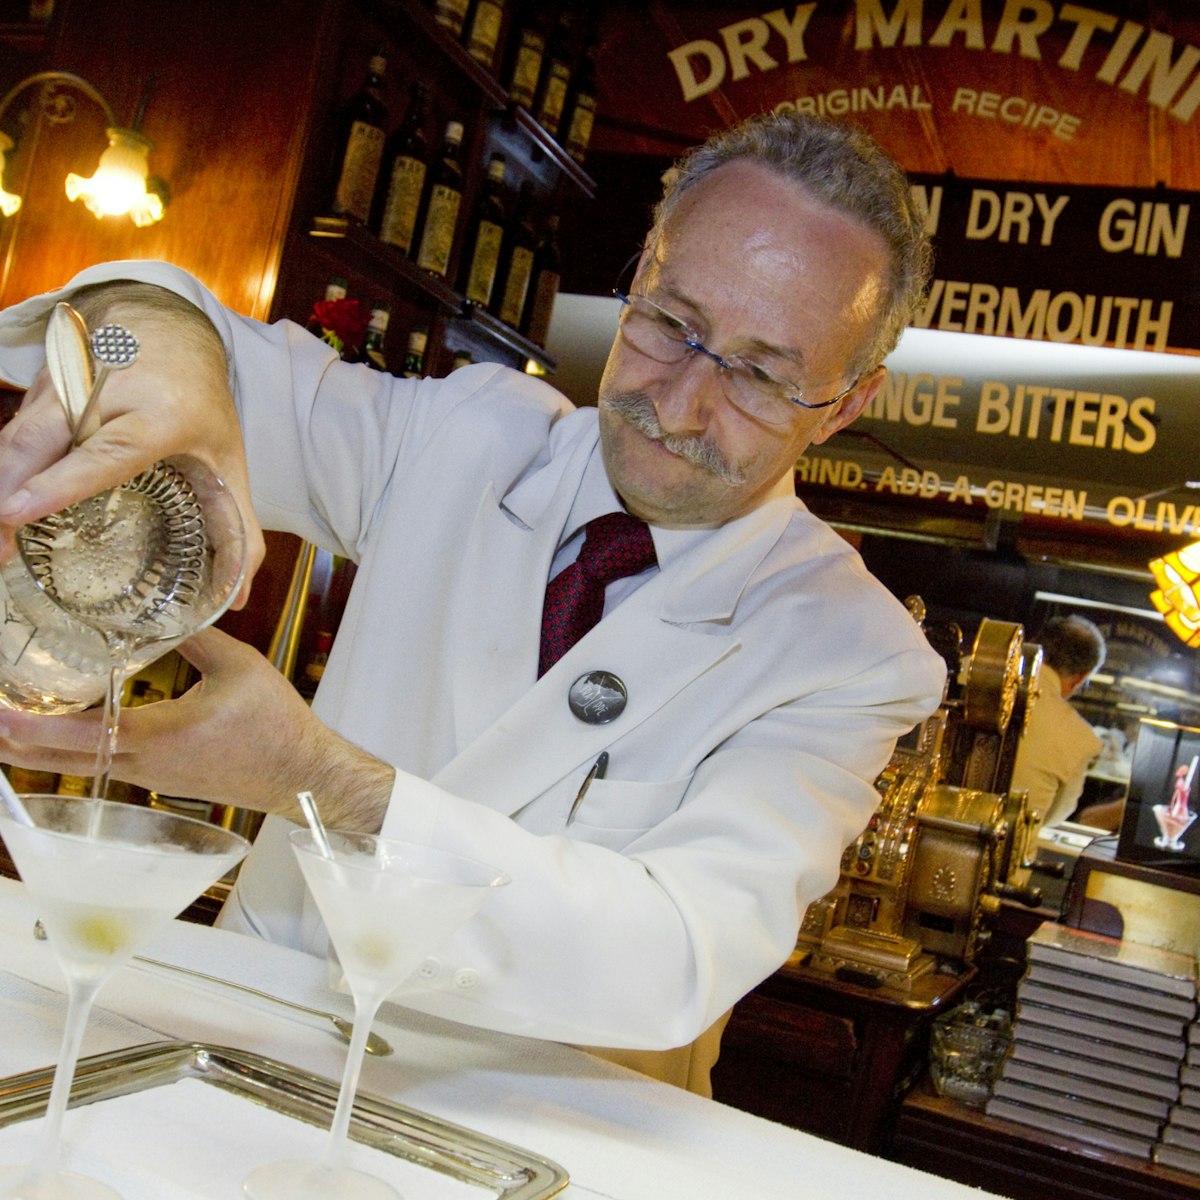 Barman preparing a Dry Martini in Dry Martini Cosmopolitan Bar, L'Eixample.